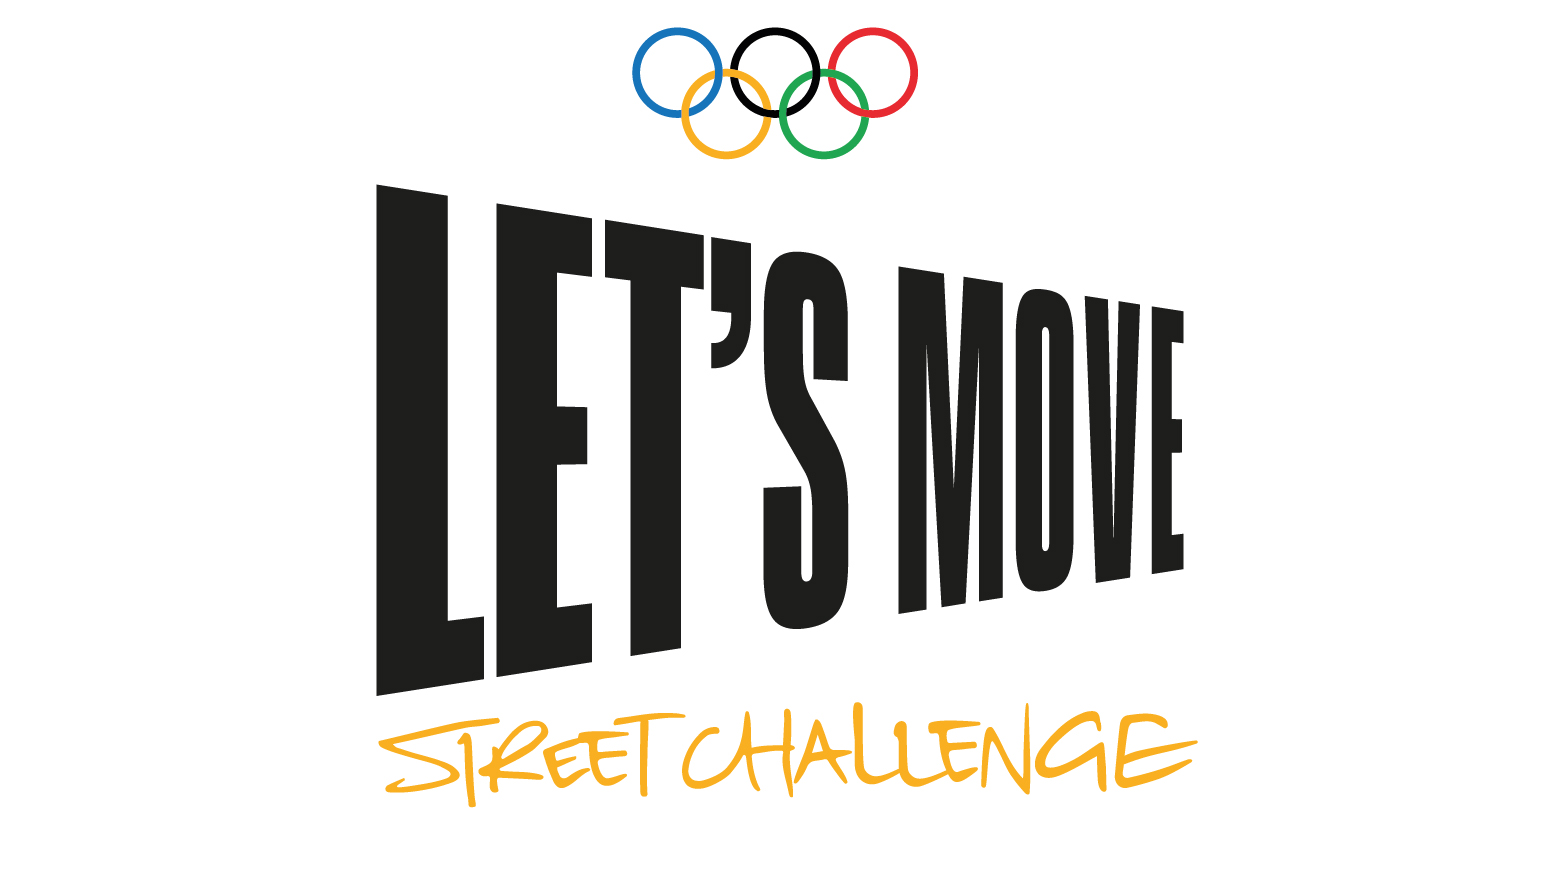 images/lets_move_street_challenge/letsmove169.jpg